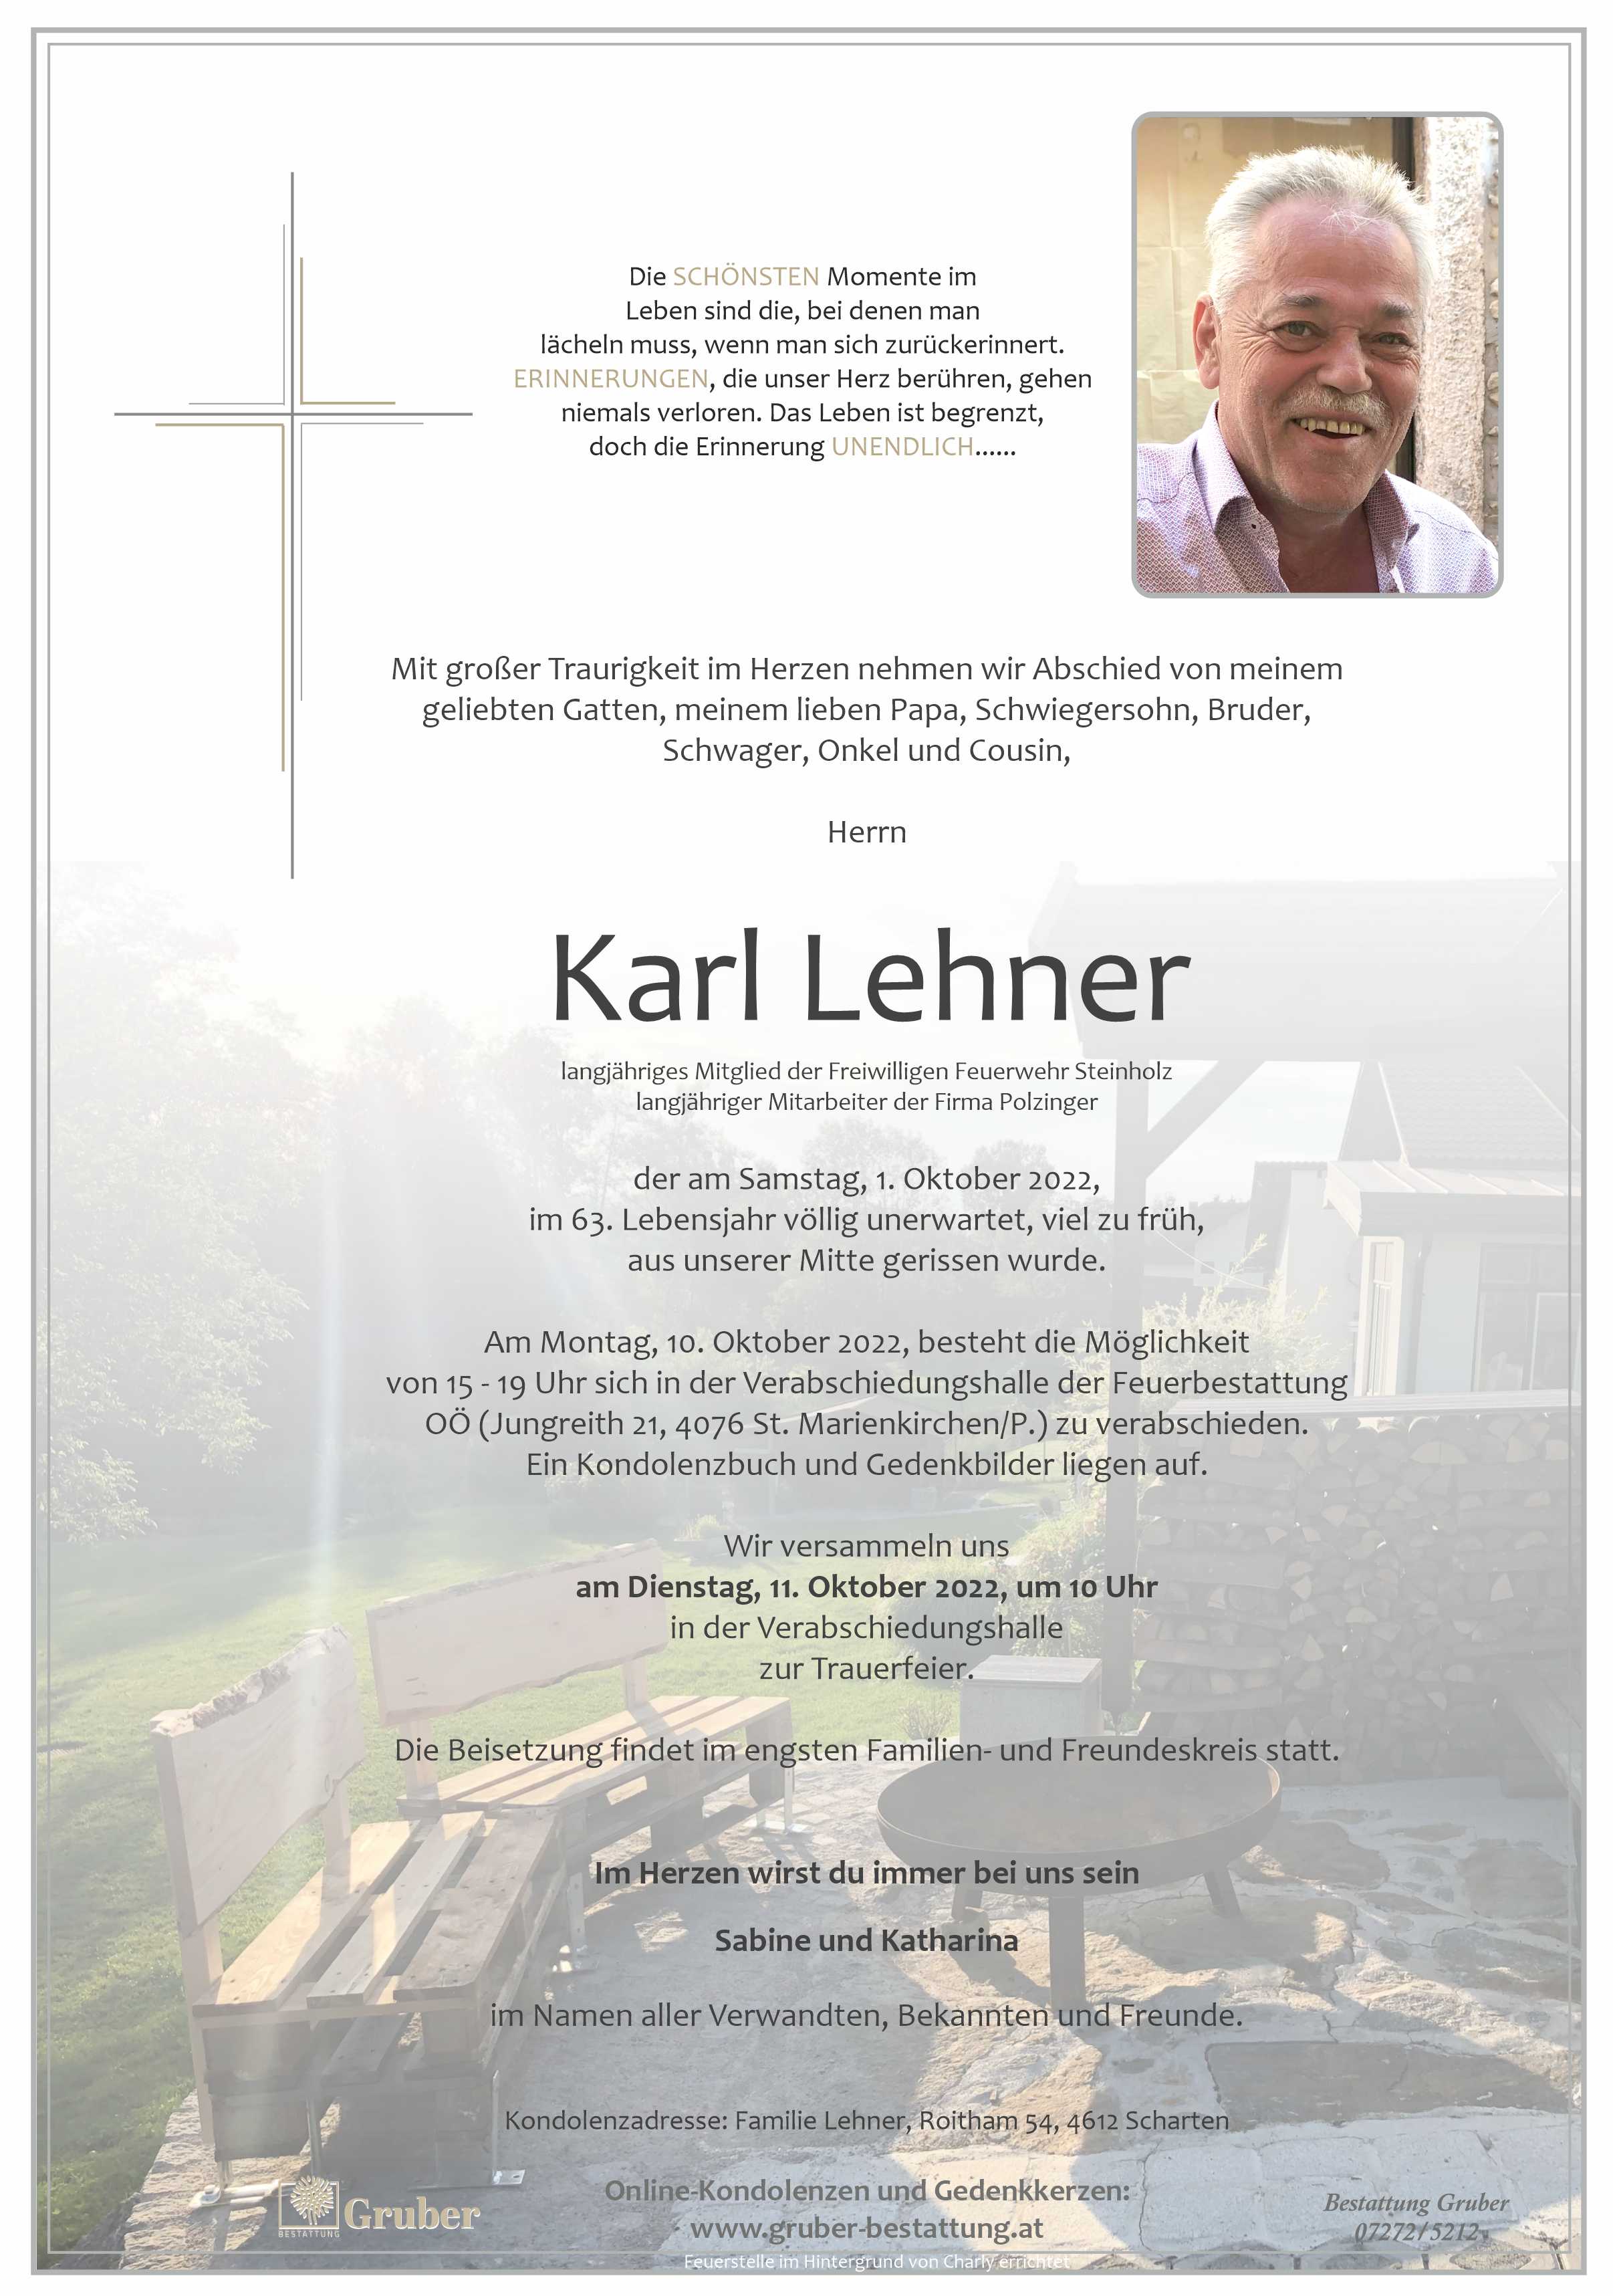 Karl Lehner (Scharten)